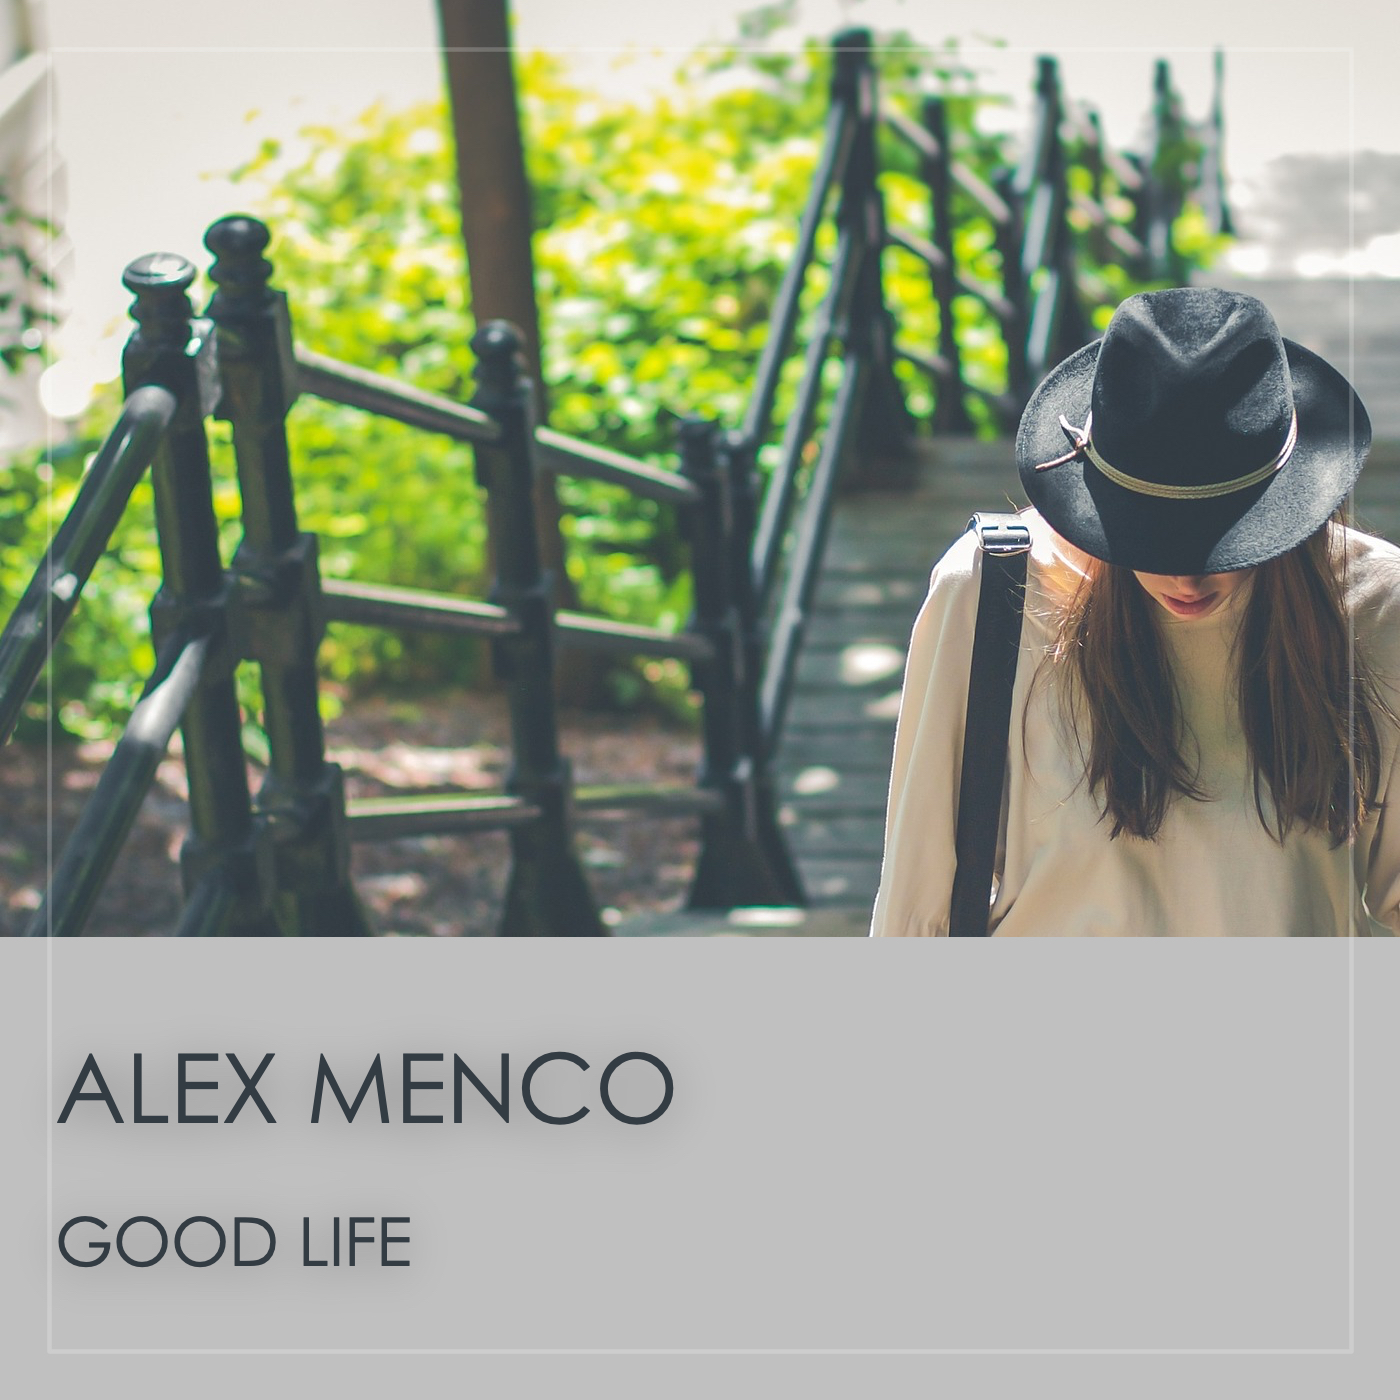 Alex menco bass extended mix. Bigger than Life Alex Menco. Good Life песня. Alex Menco - with you. Alex Menco - bigger than Life (Extended Mix).